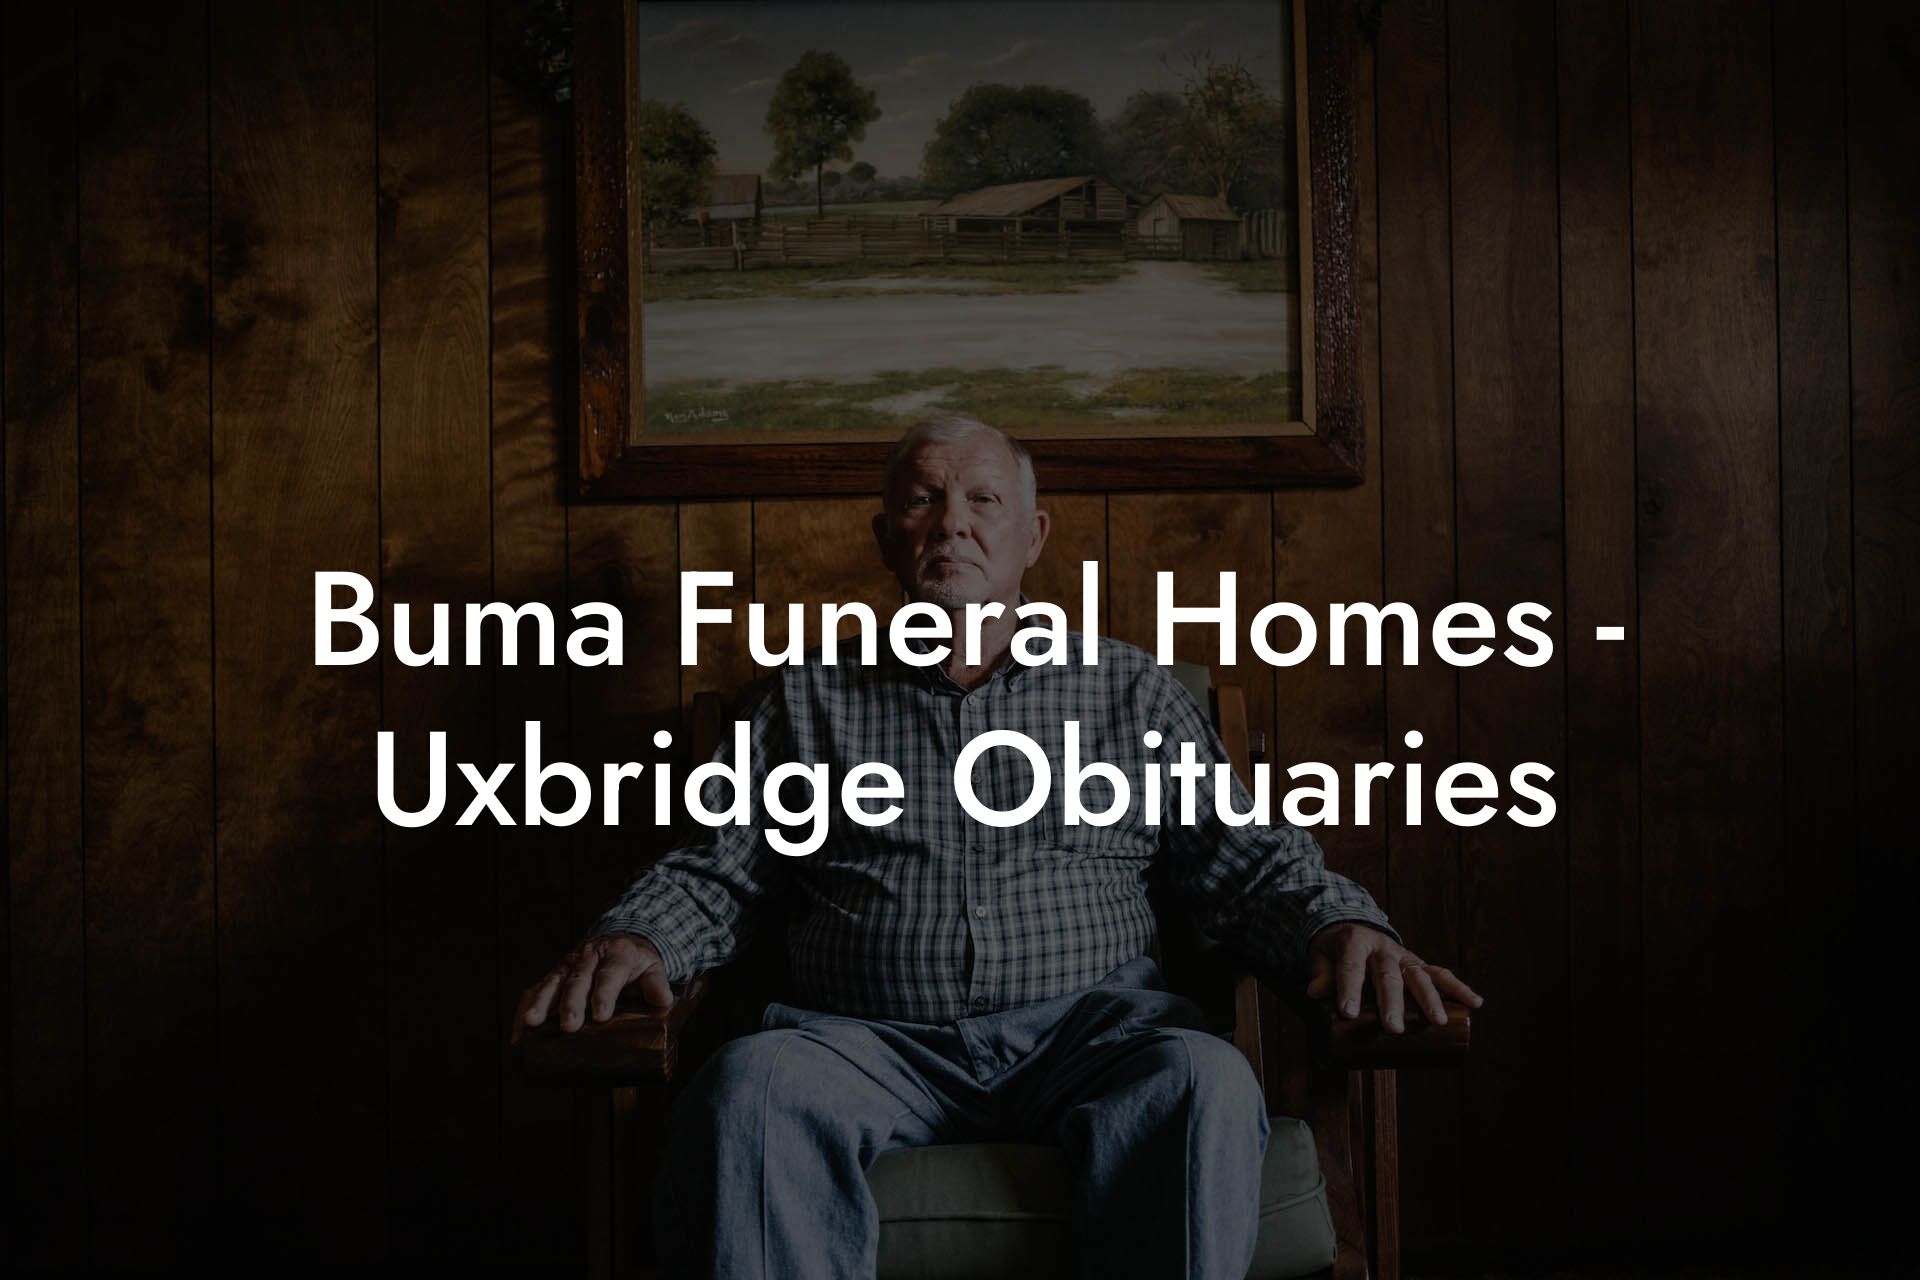 Buma Funeral Homes - Uxbridge Obituaries